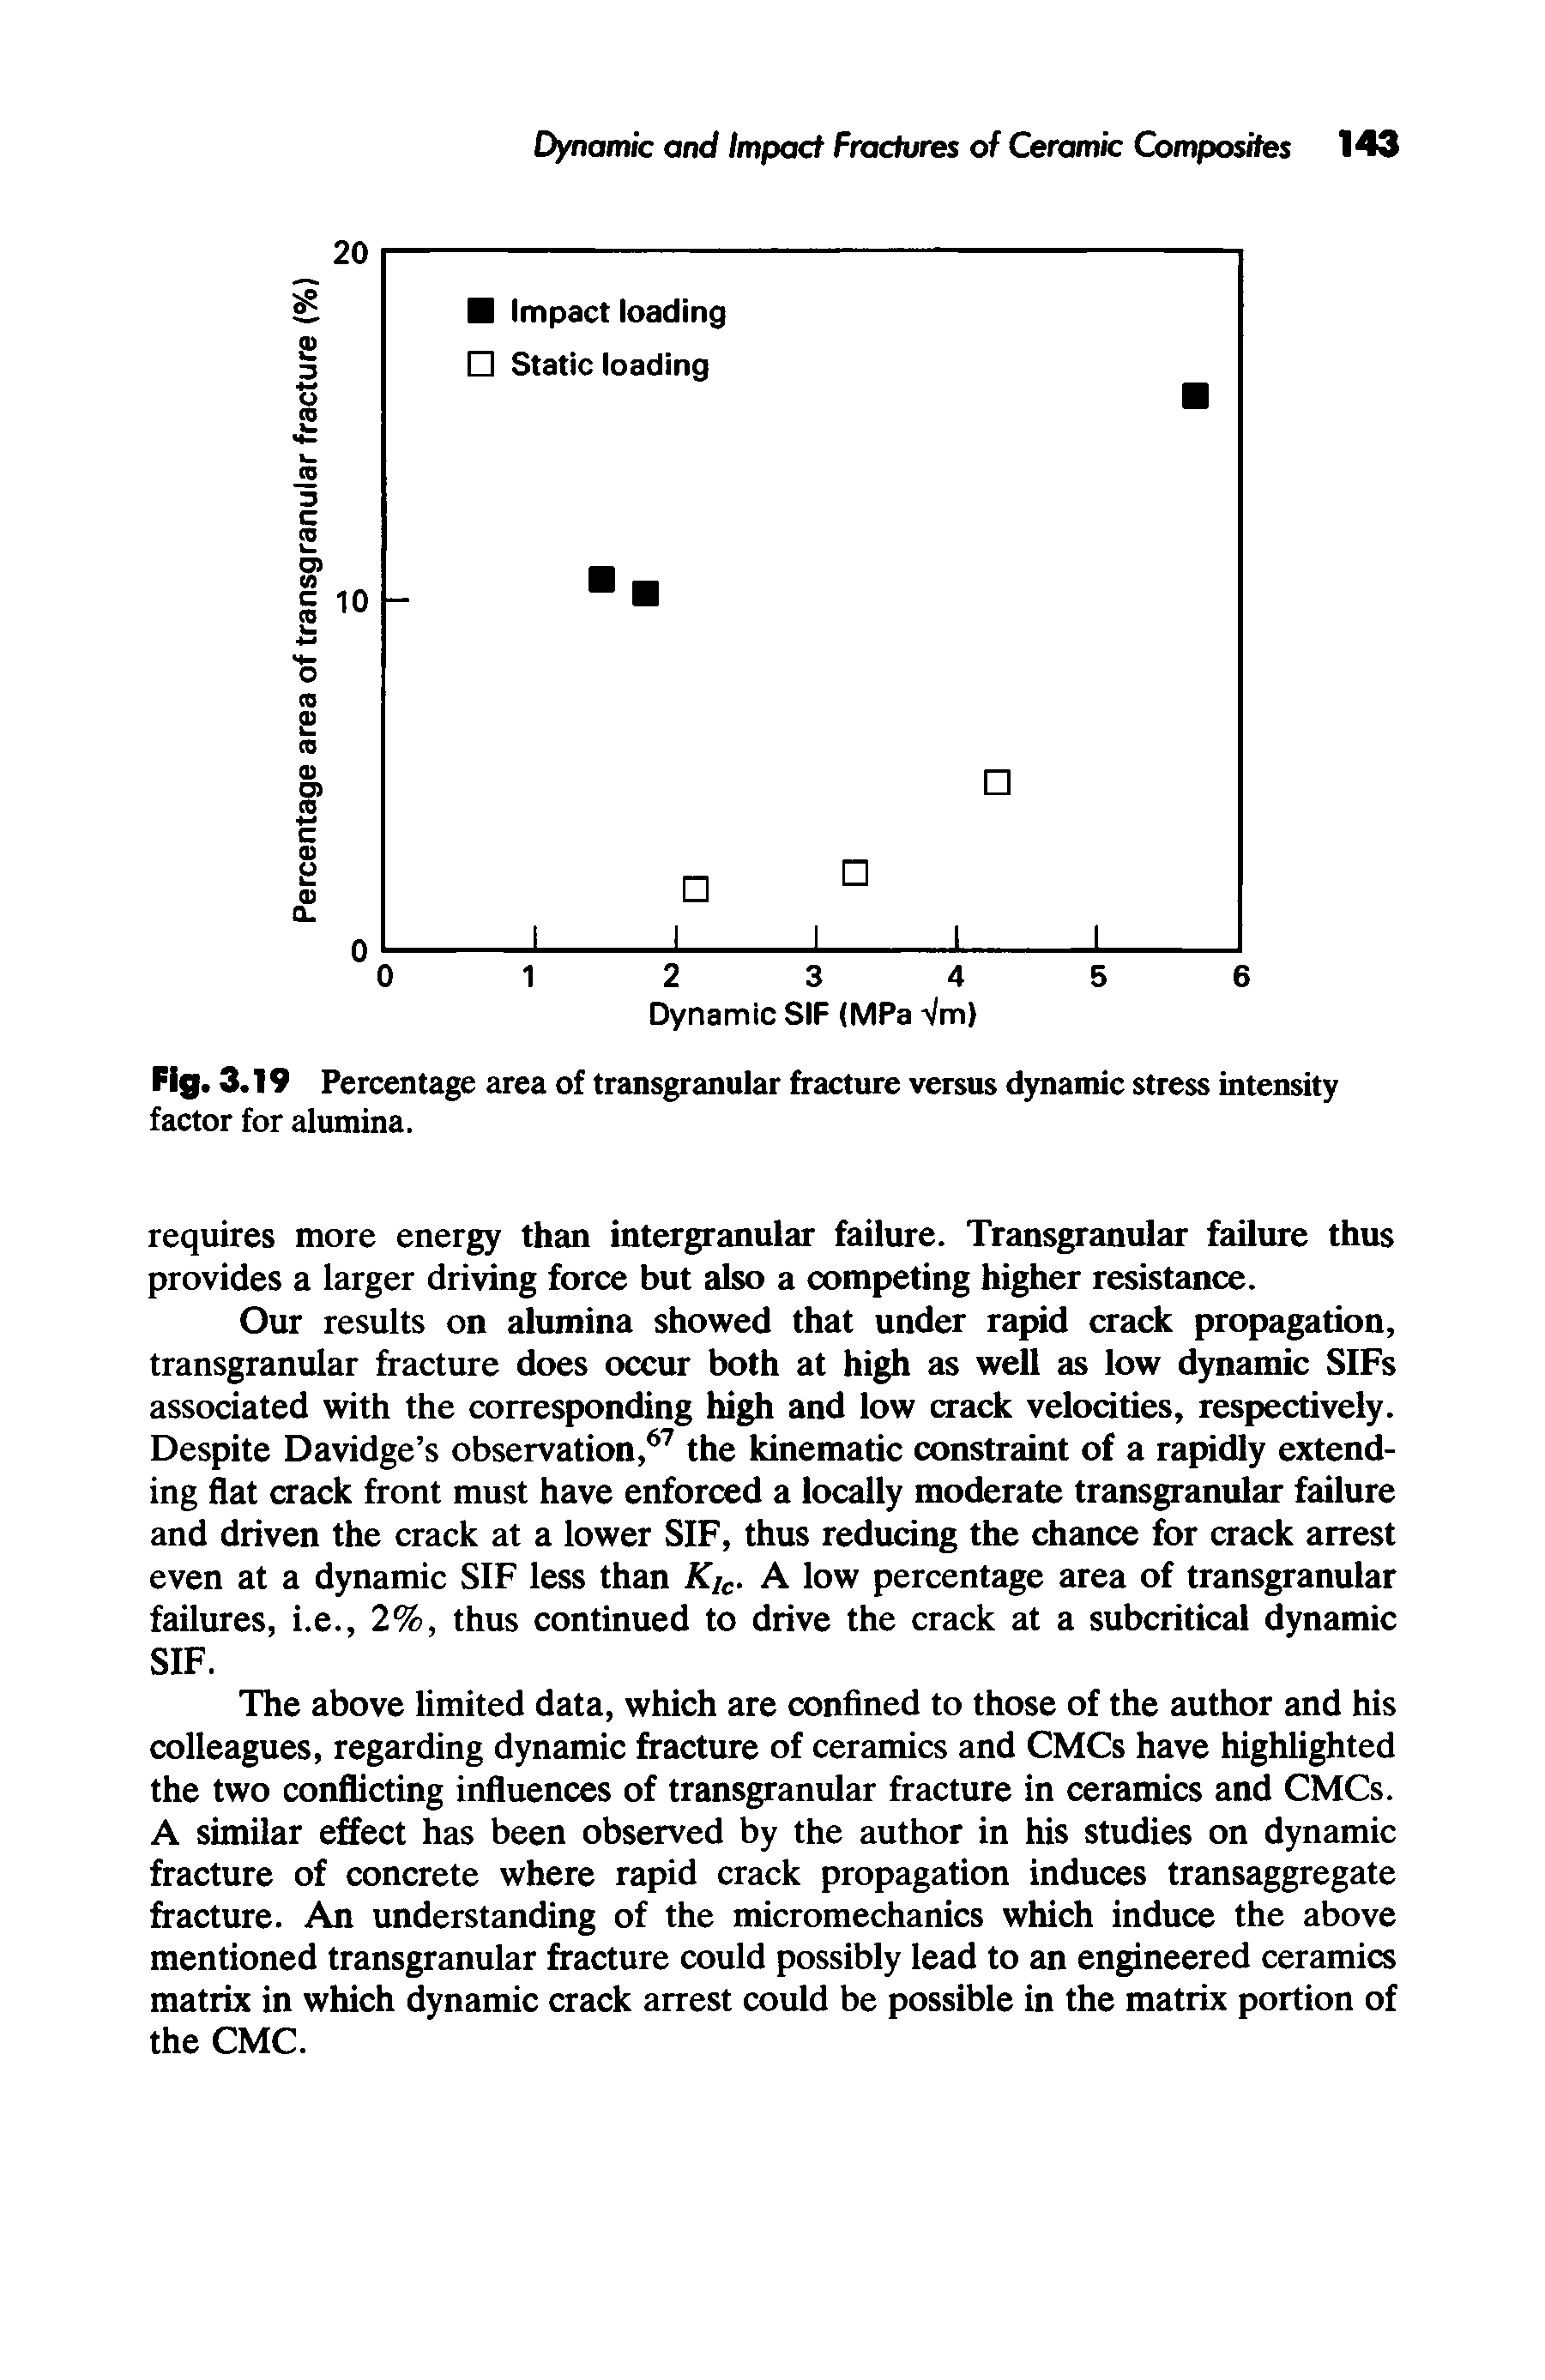 Fig. 3.19 Percentage area of transgranular fracture versus dynamic stress intensity factor for alumina.